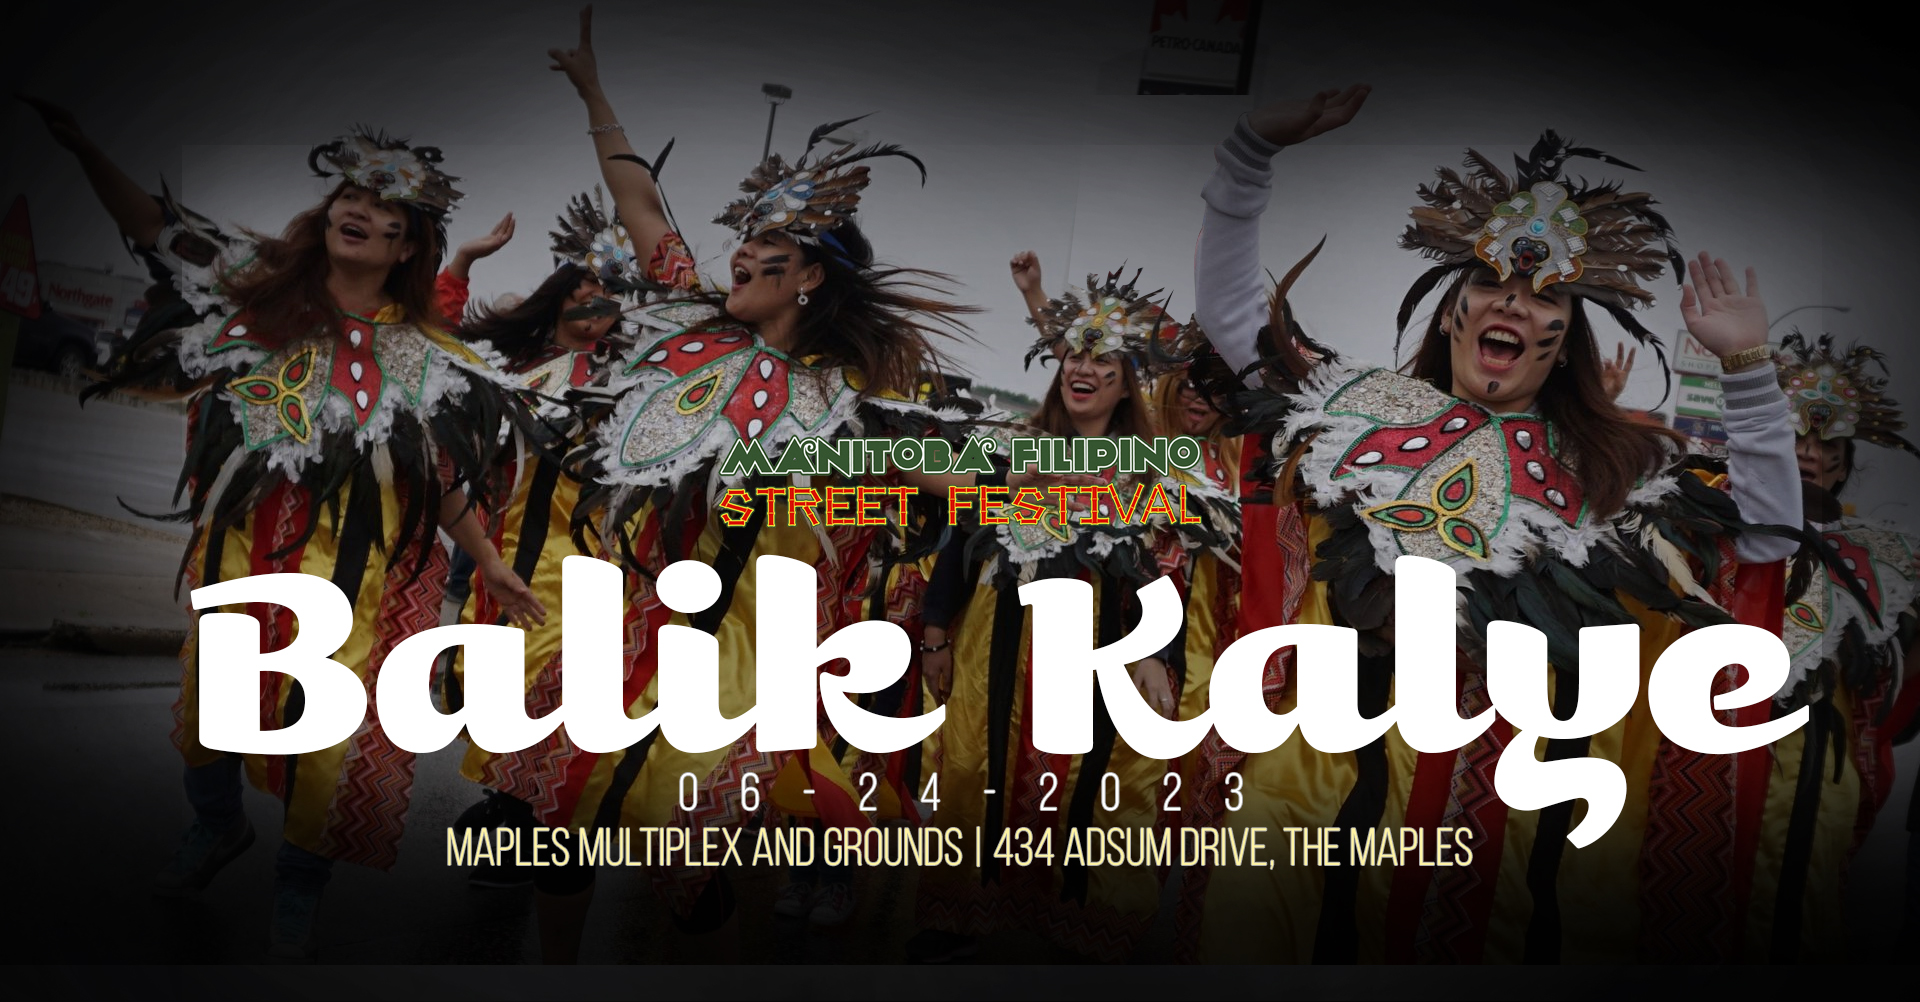 Manitoba Filipino Street Festival